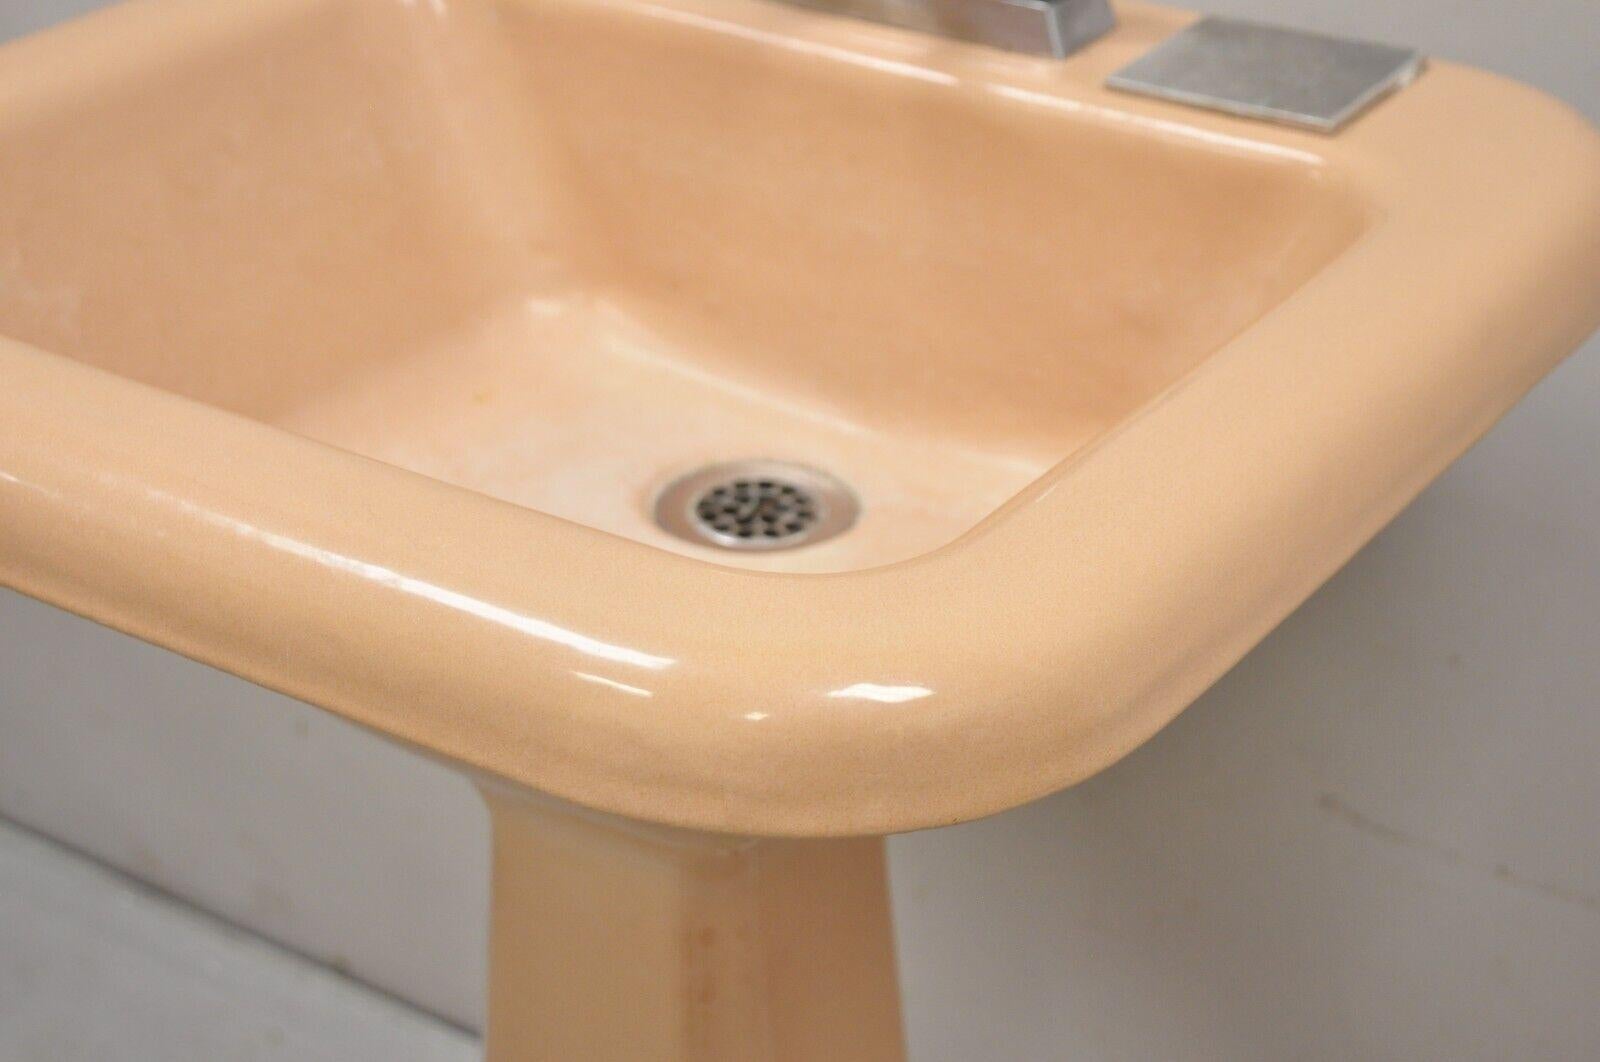 scalloped pedestal sink